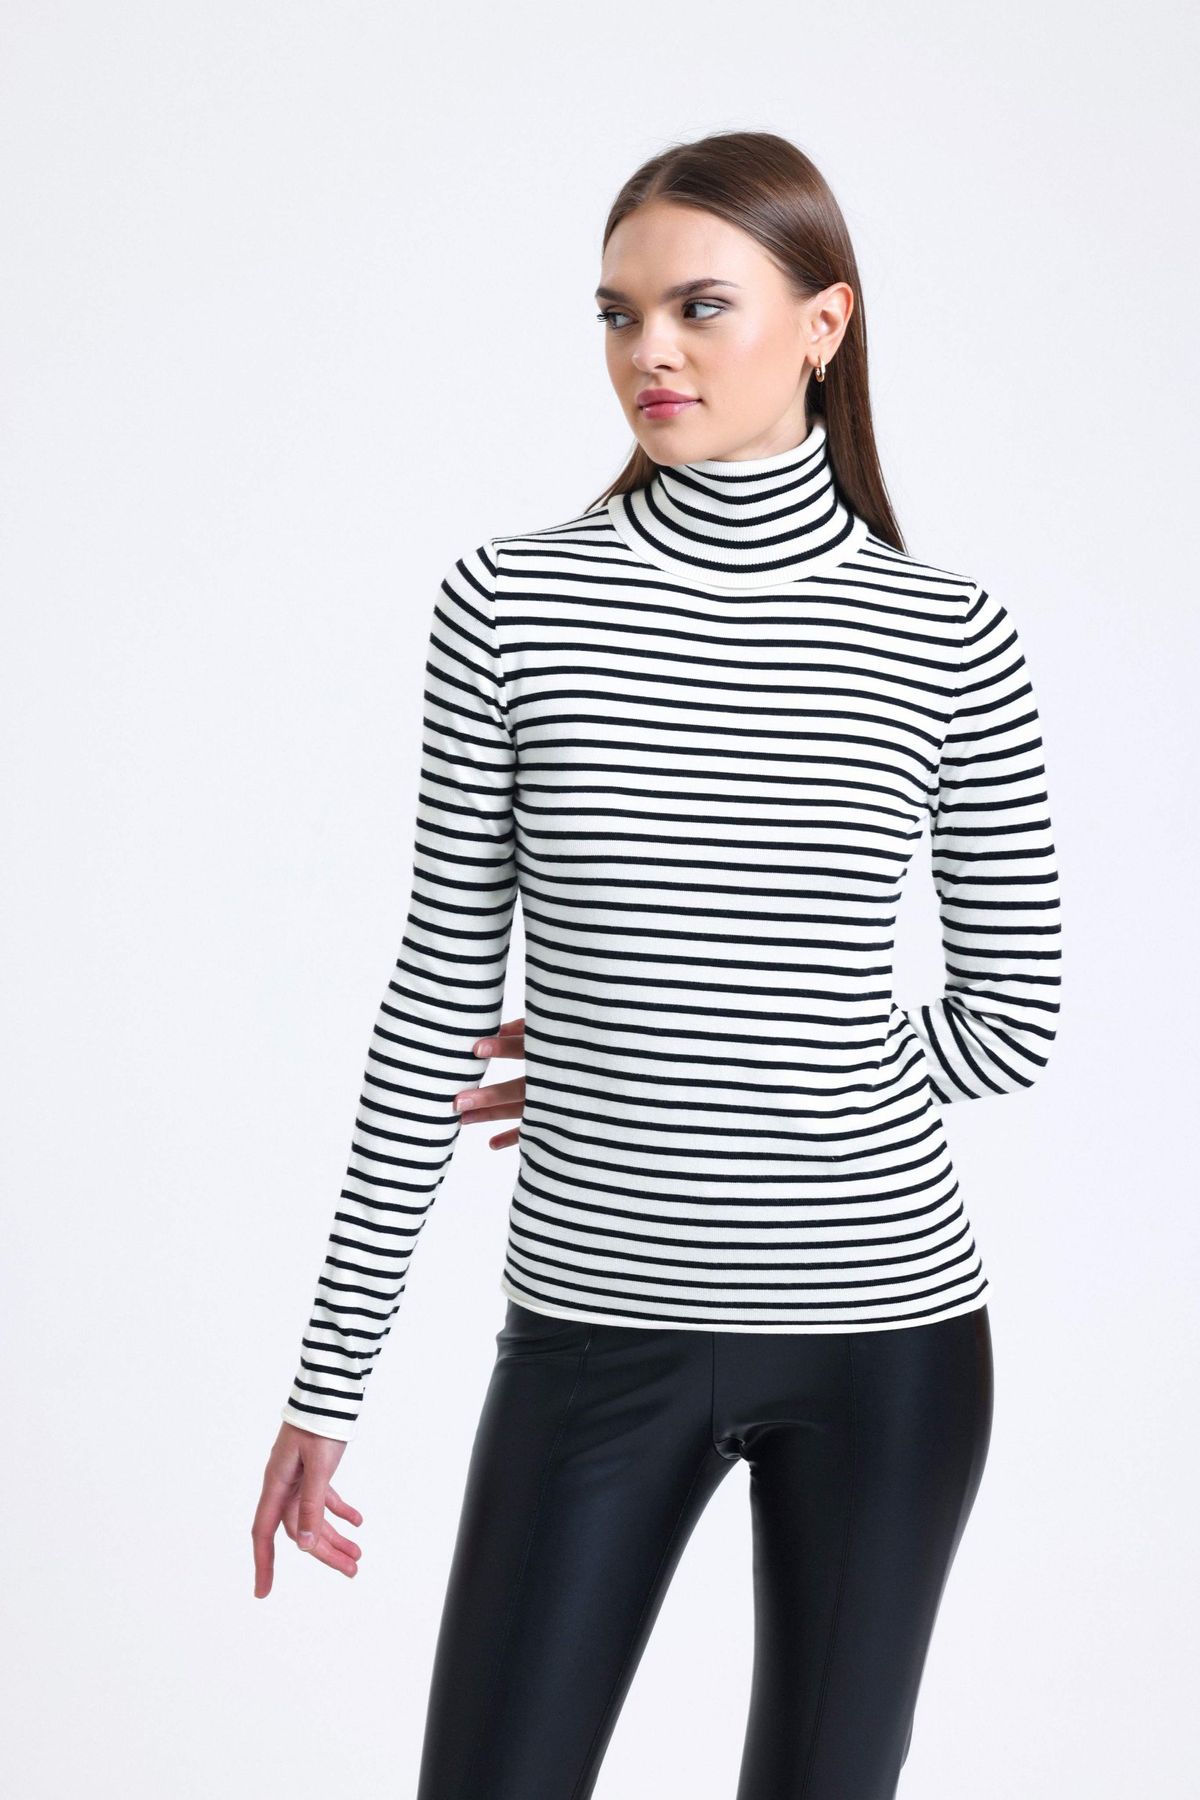 Striped High Neck Sweater